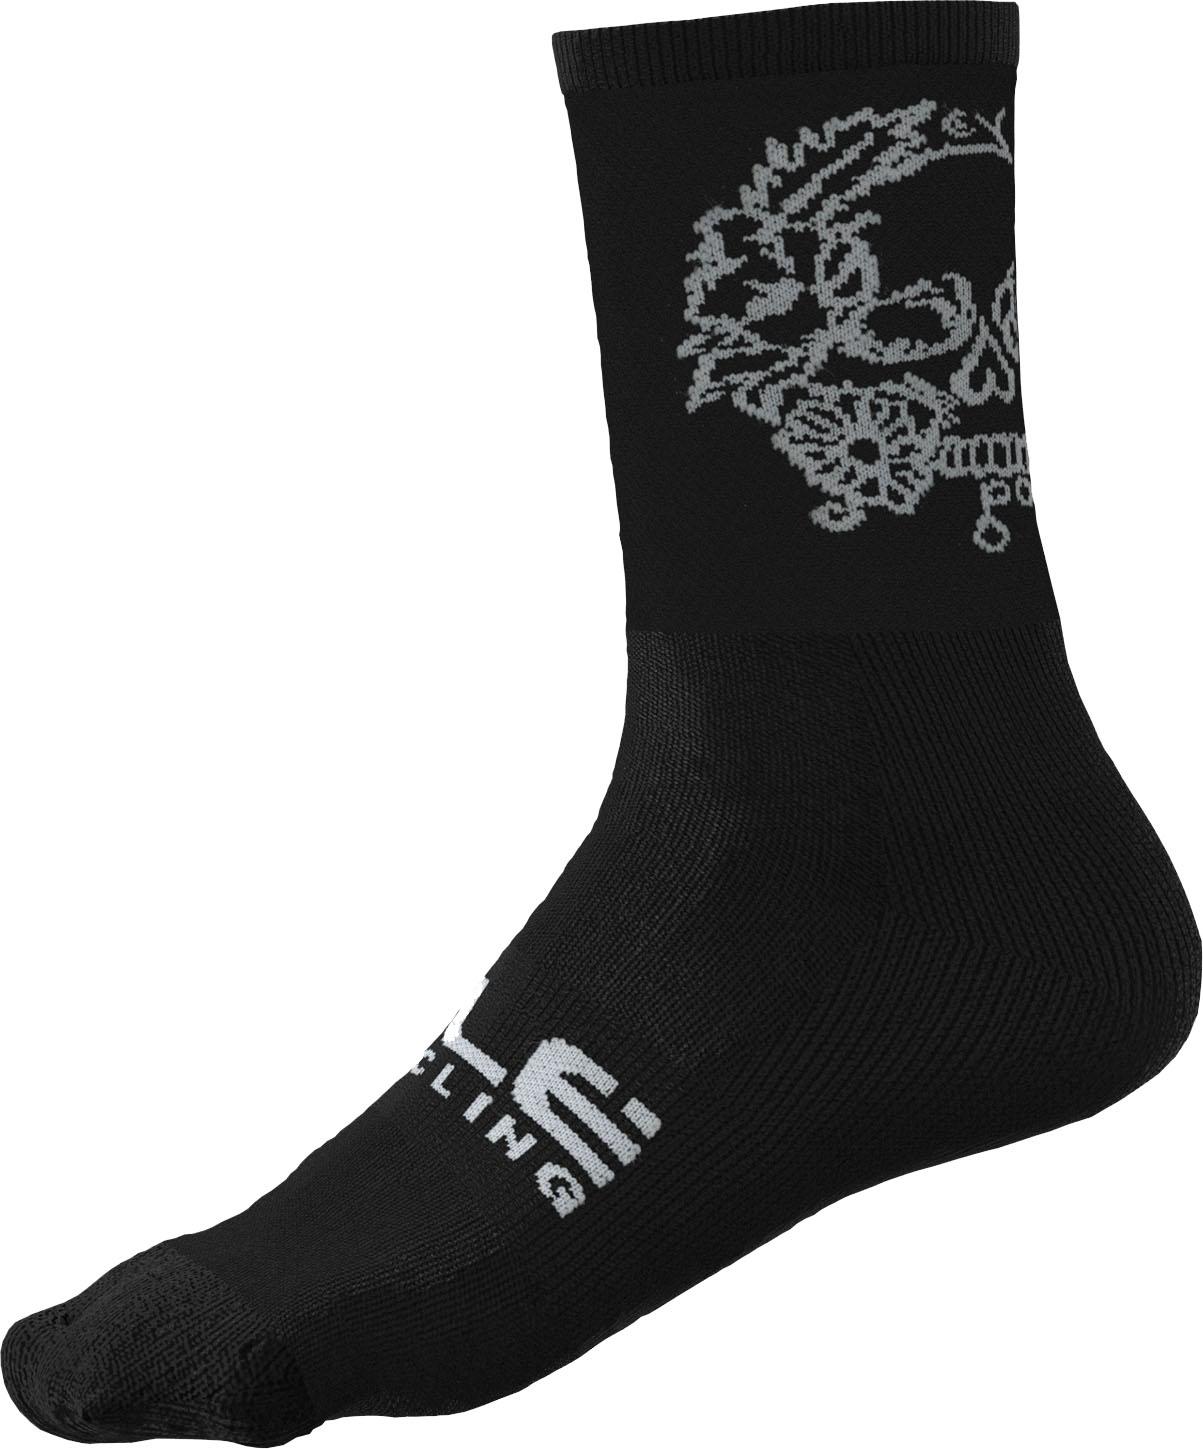 Al Skull Cycling Socks - Black